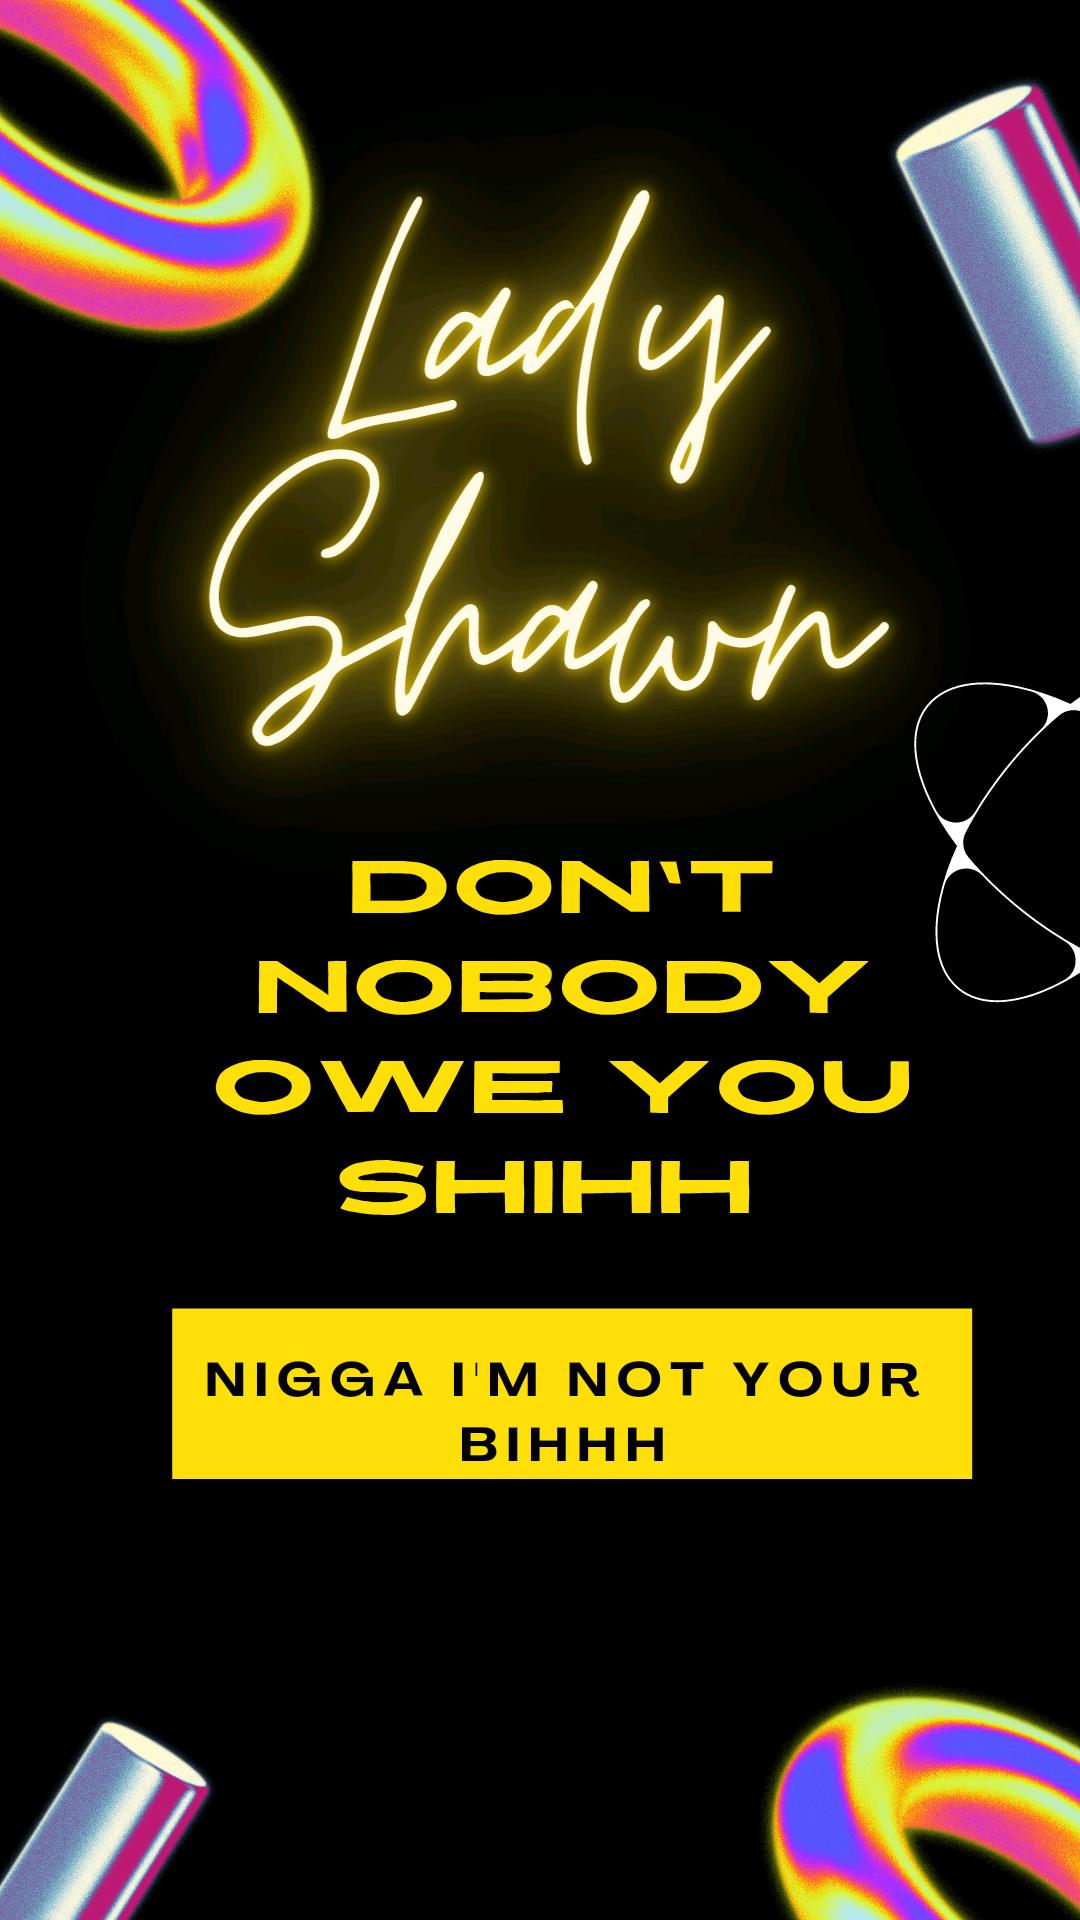 DON'T NOBODY OWE YOU SHIhh 🥀 LB